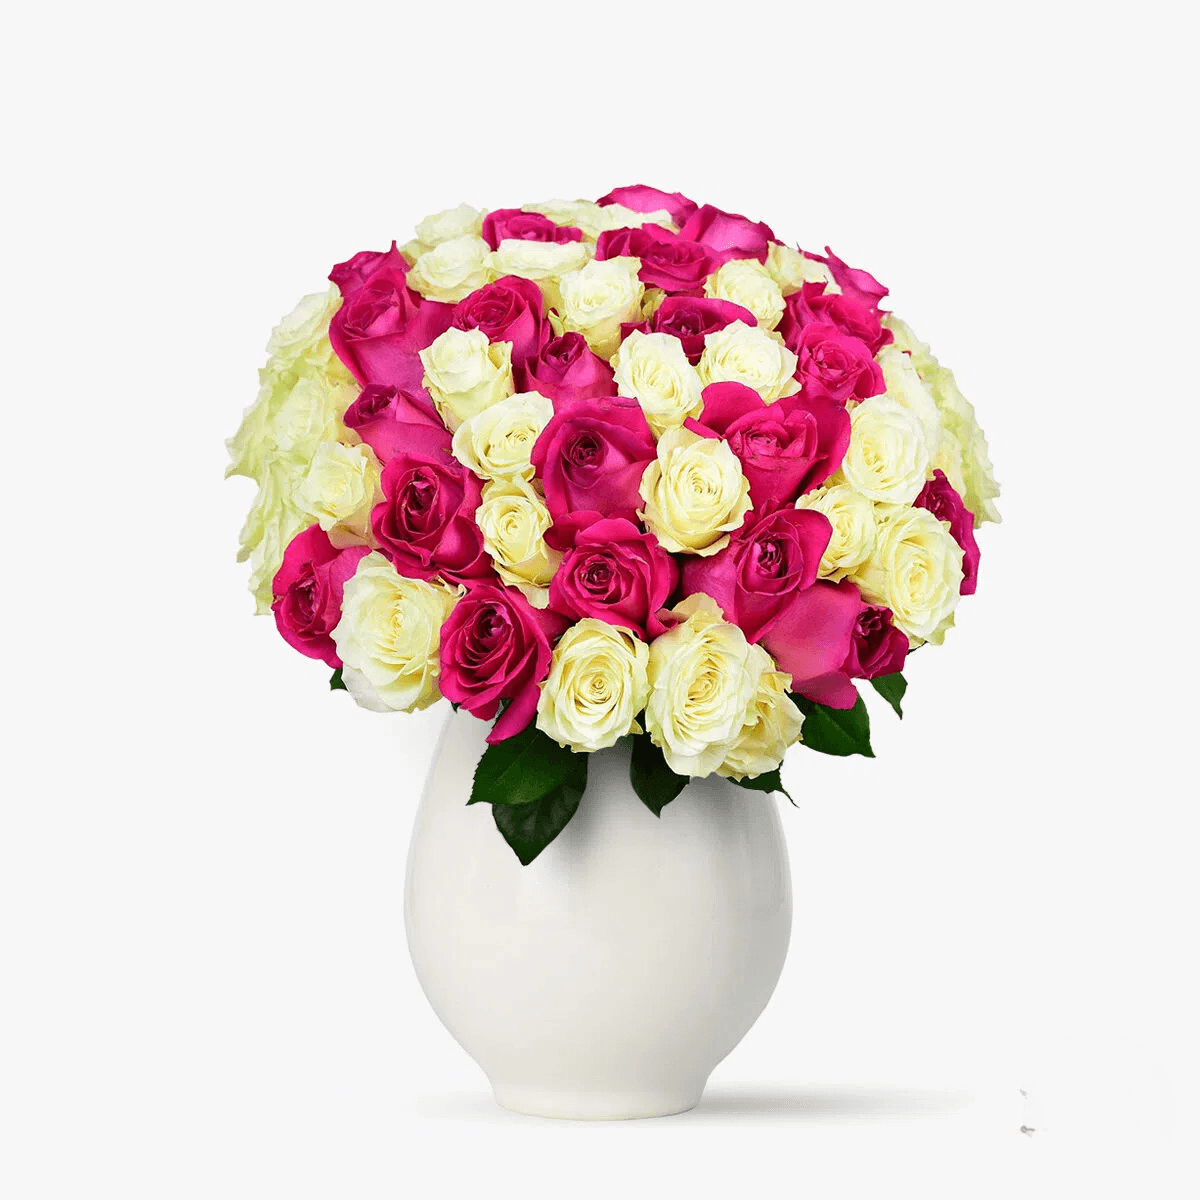 Buchet de flori cu trandafiri albi si roz Bucuria dragostei